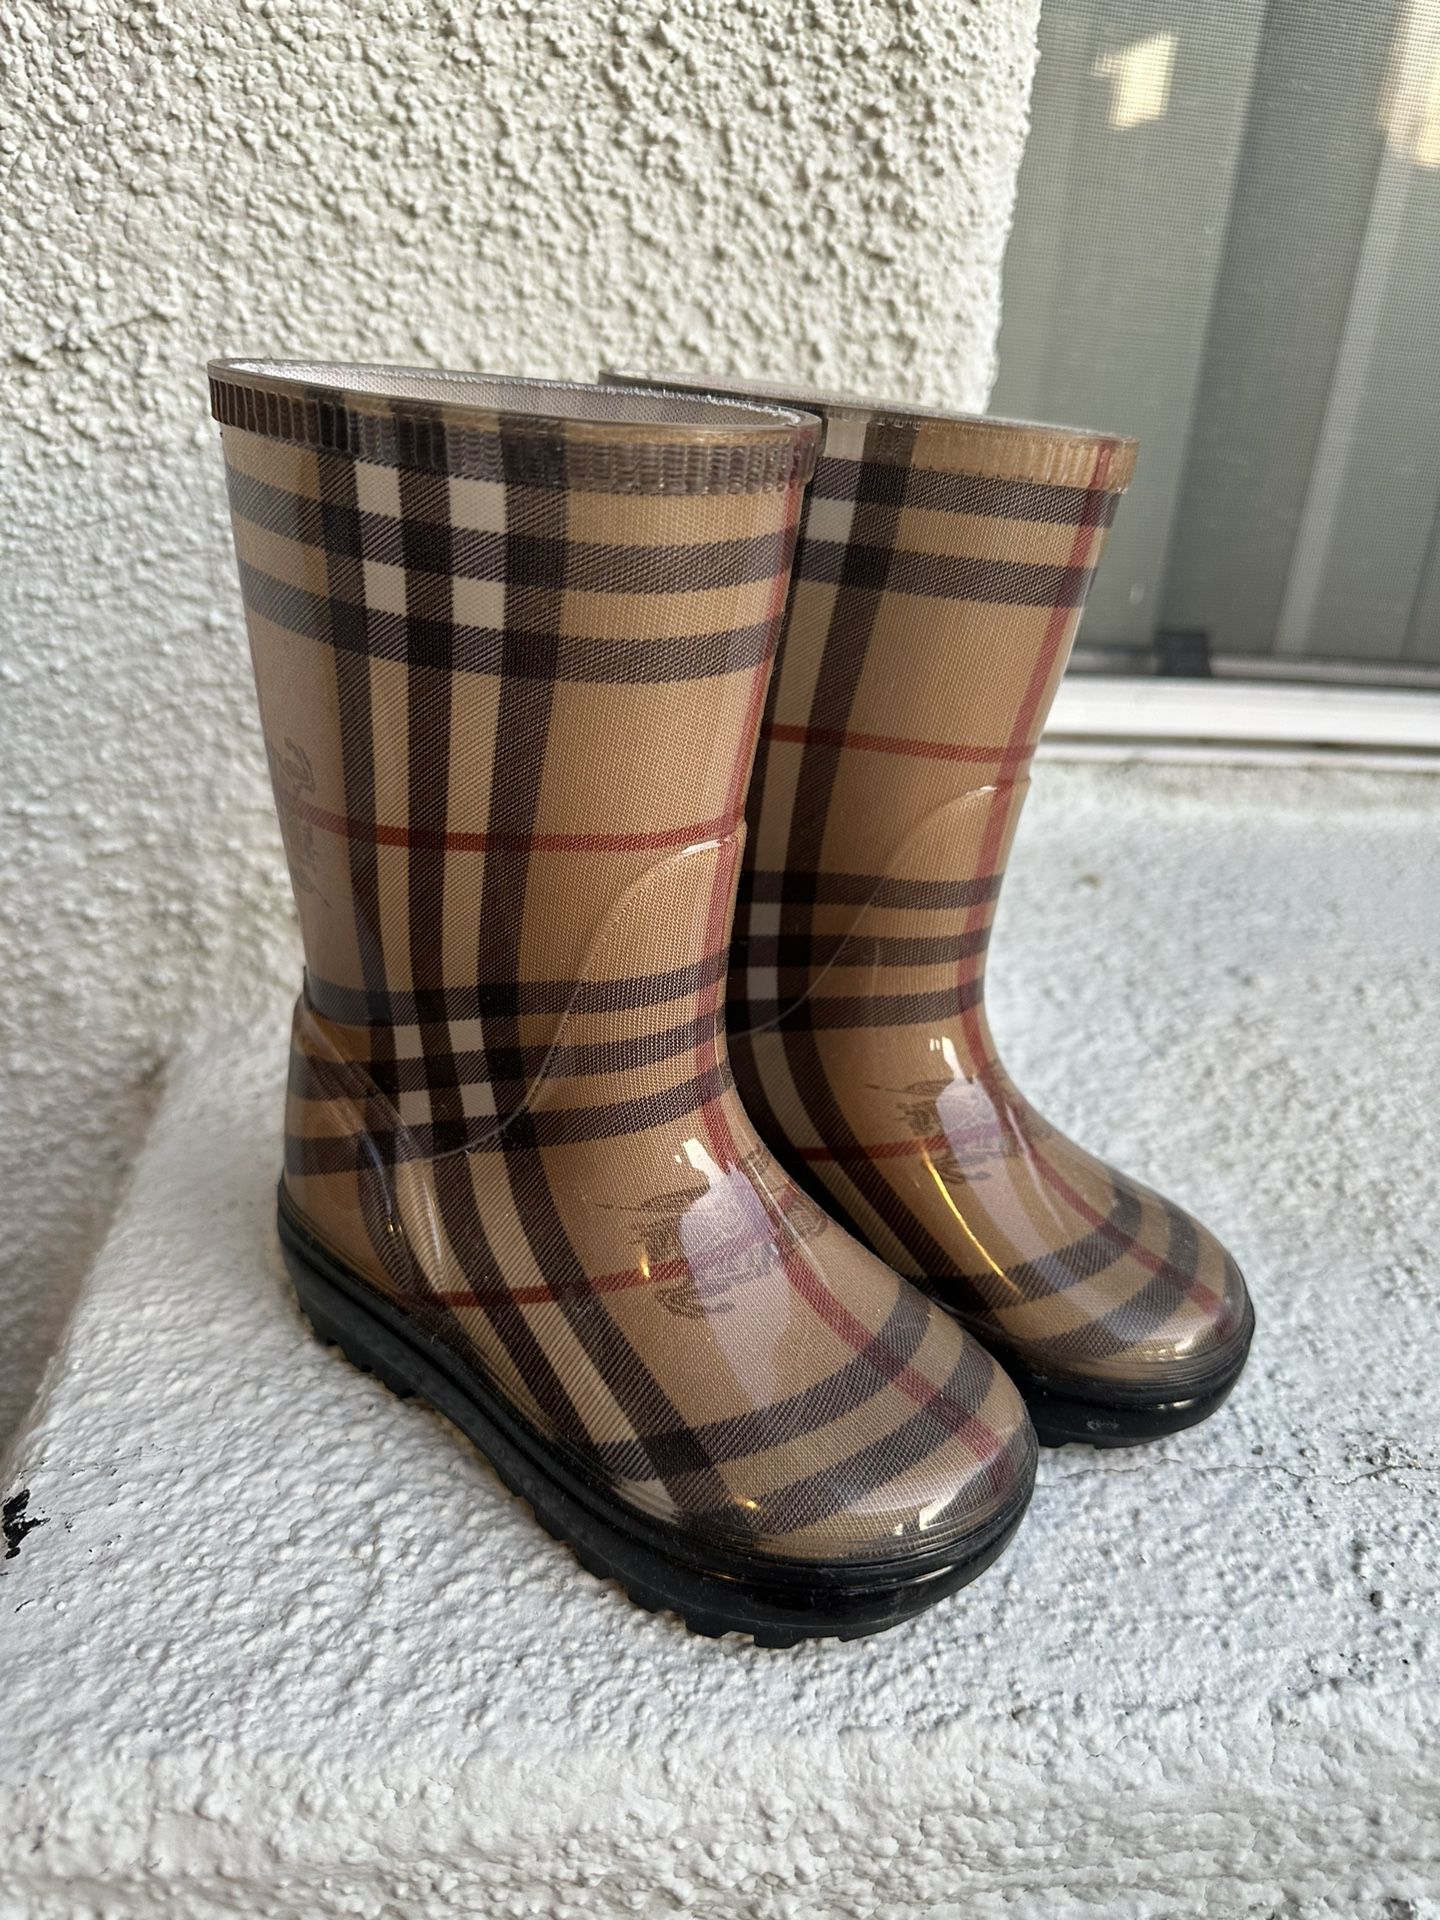 Girls Burberry Rain Boots 